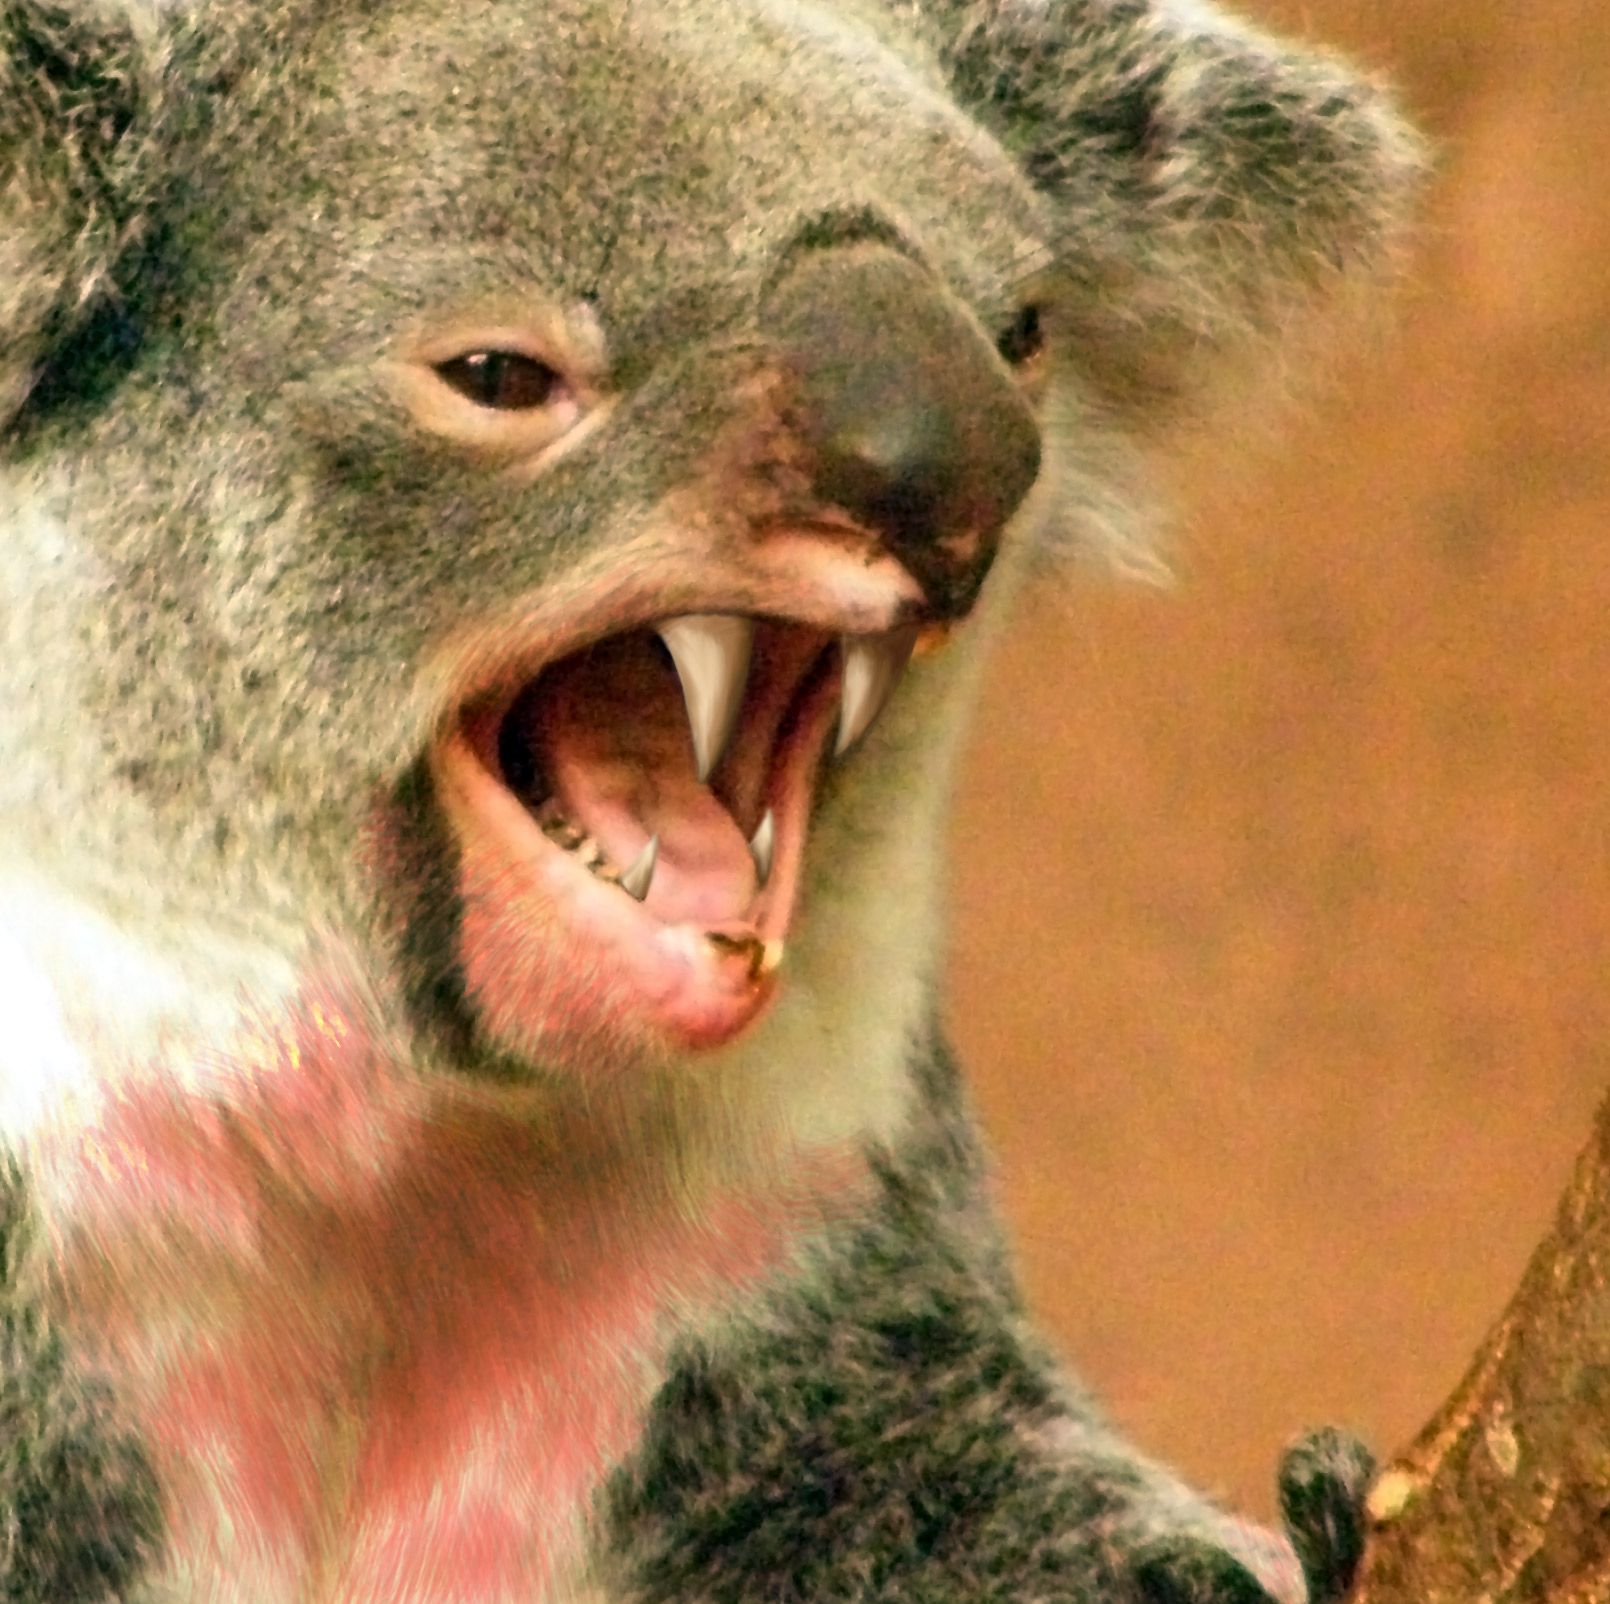 Australian Icons:The Ferocious Australian Drop Bear